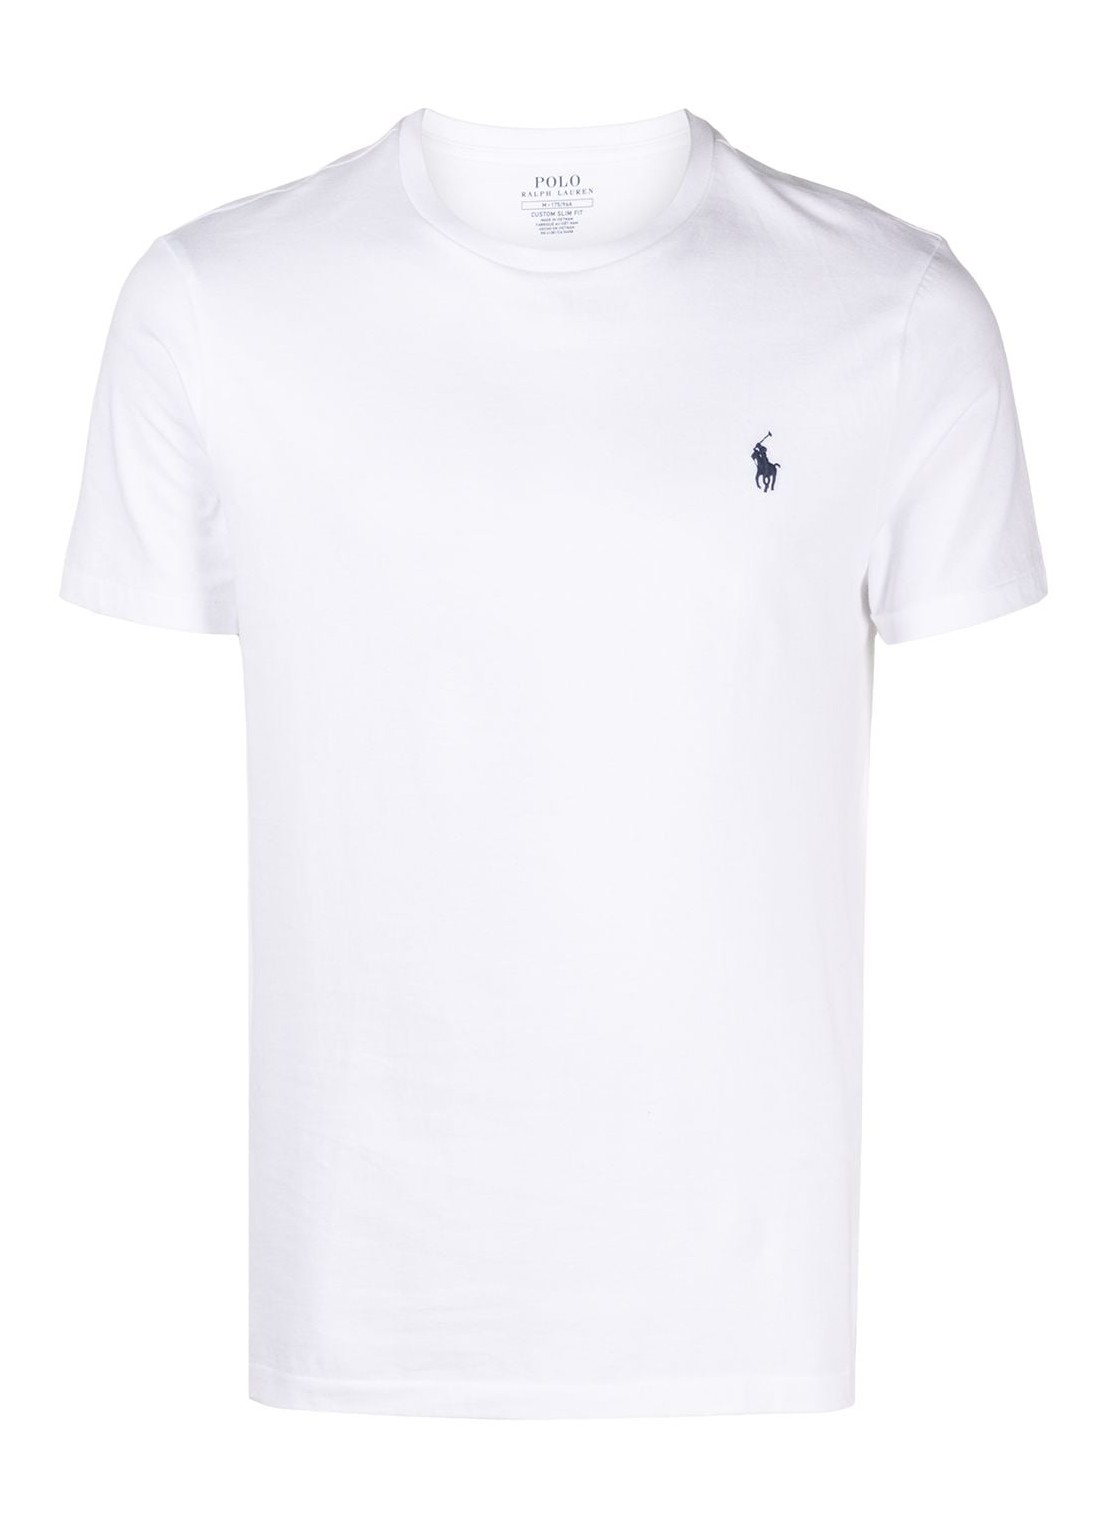 Camiseta polo ralph lauren t-shirt man jersey ssl tshirt 710680785003 white talla L
 